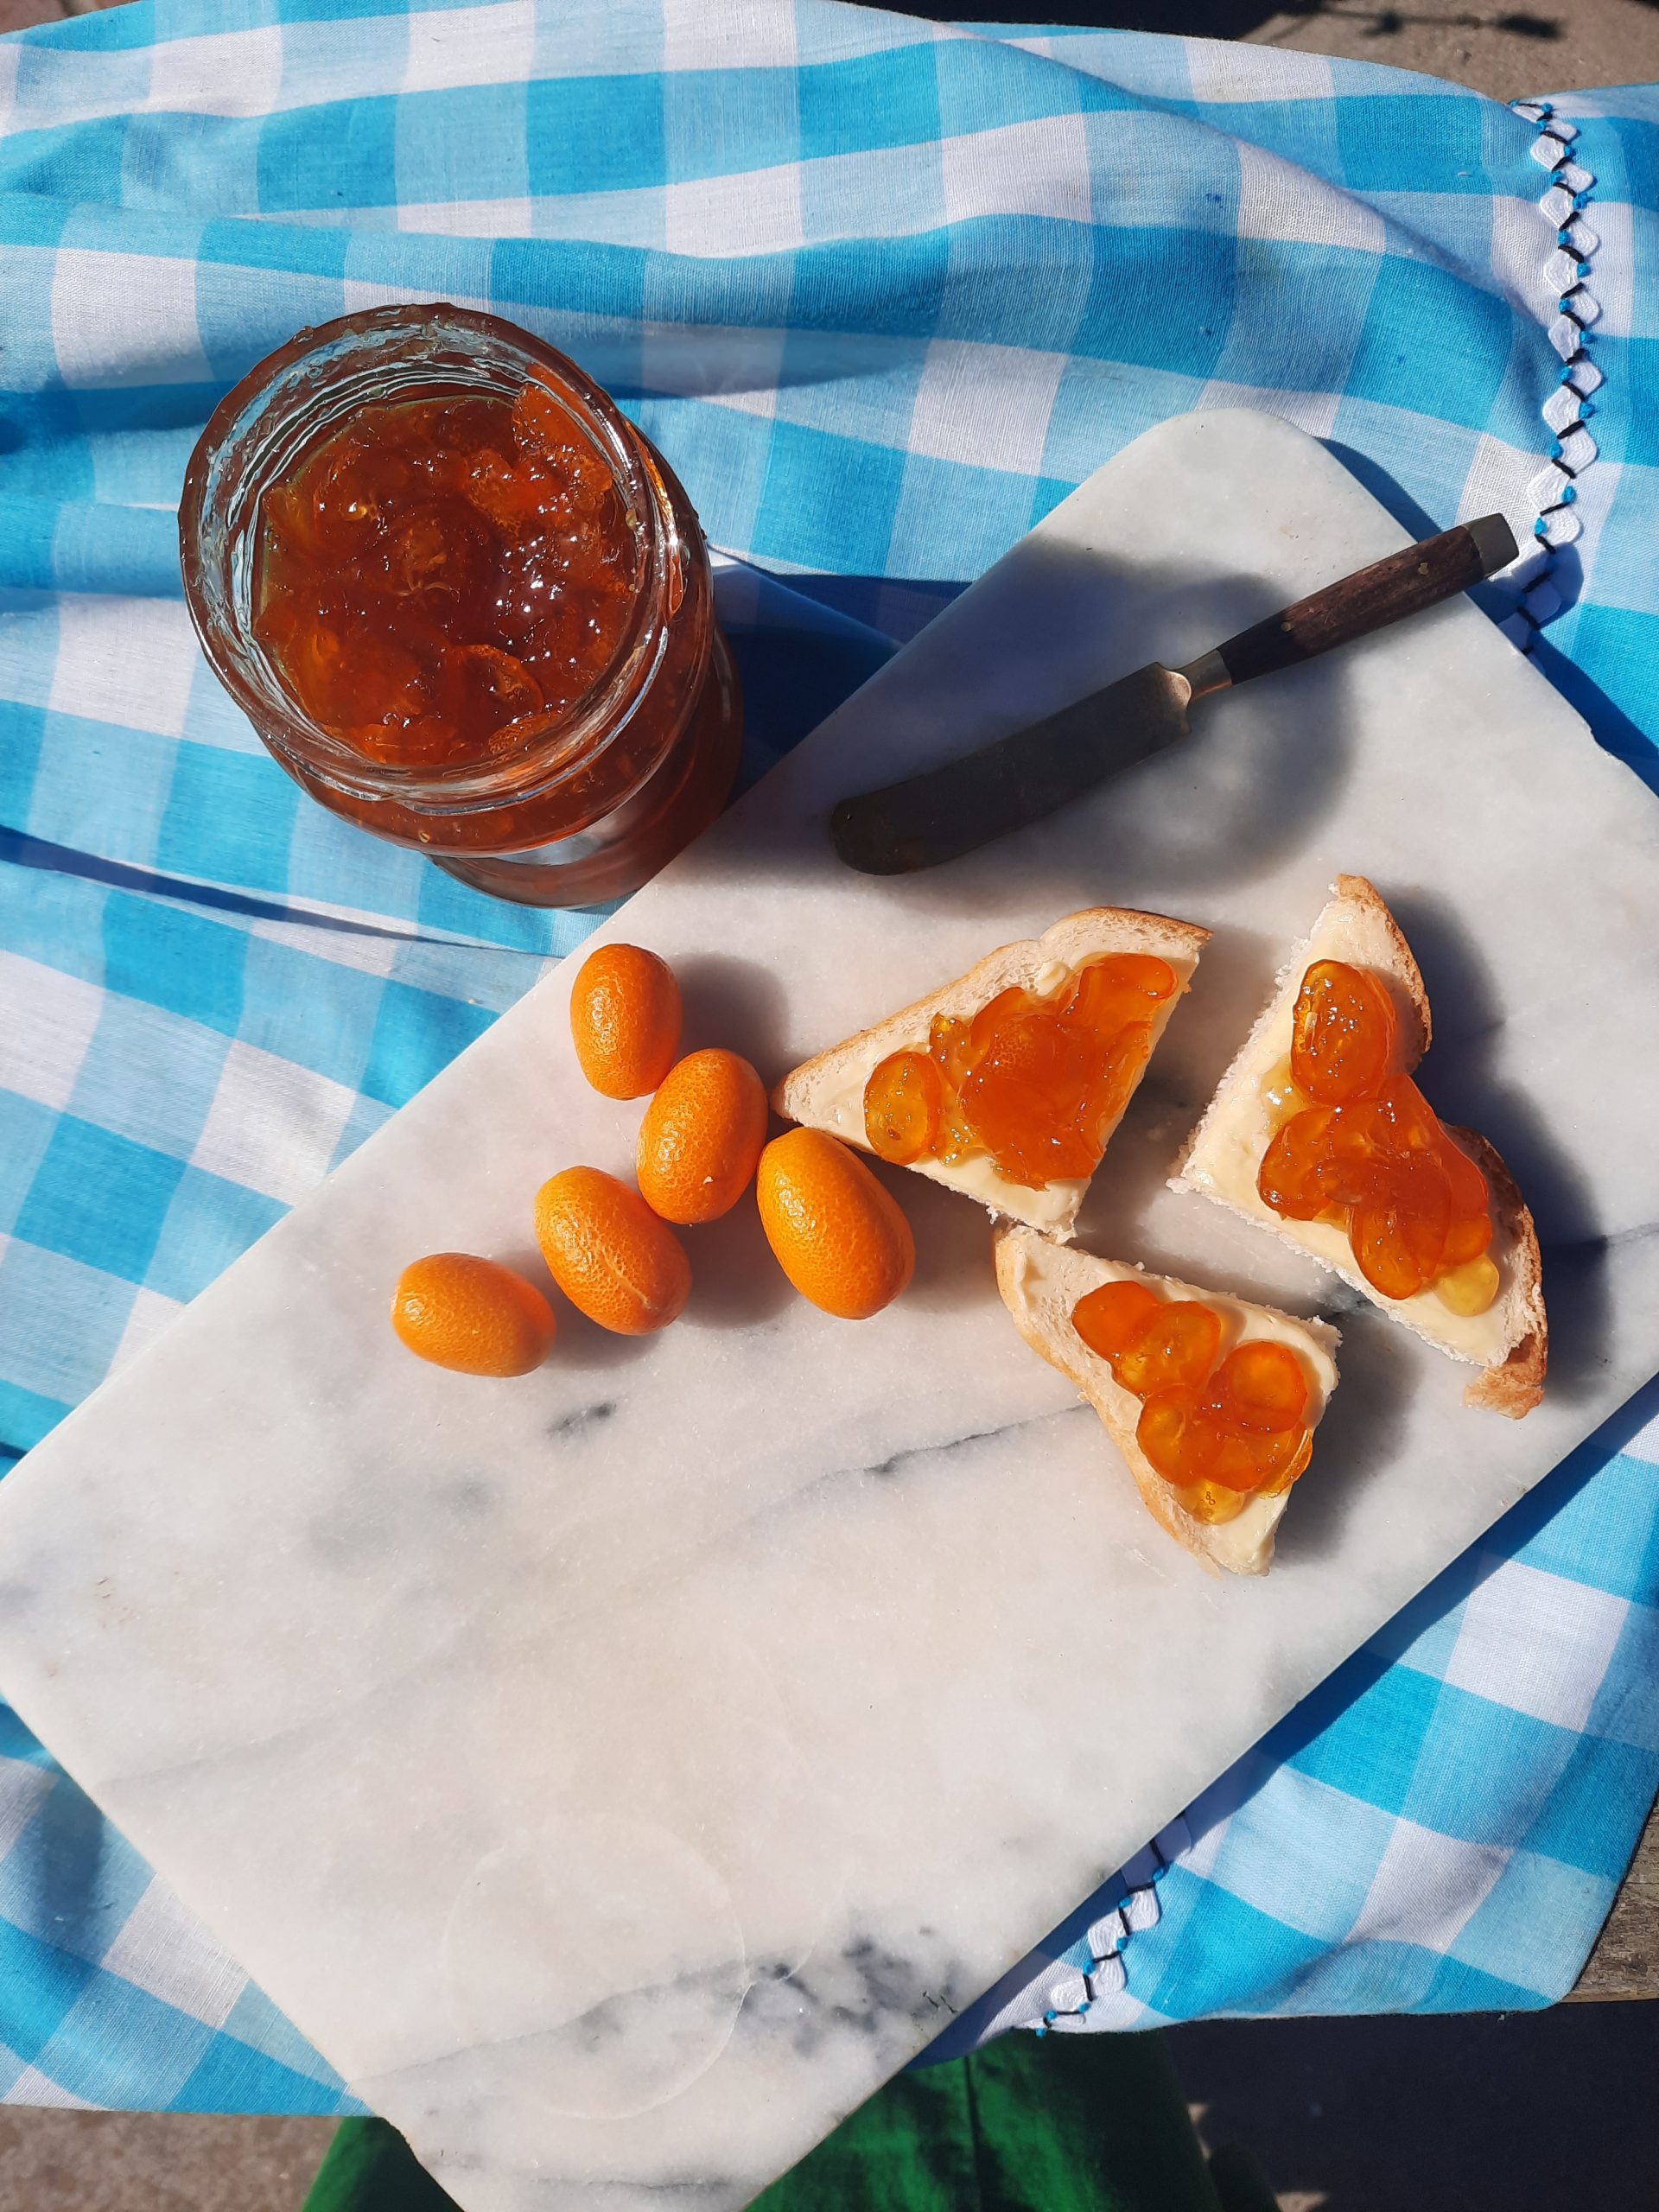 Kumquat marmalade packs a citrussy punch